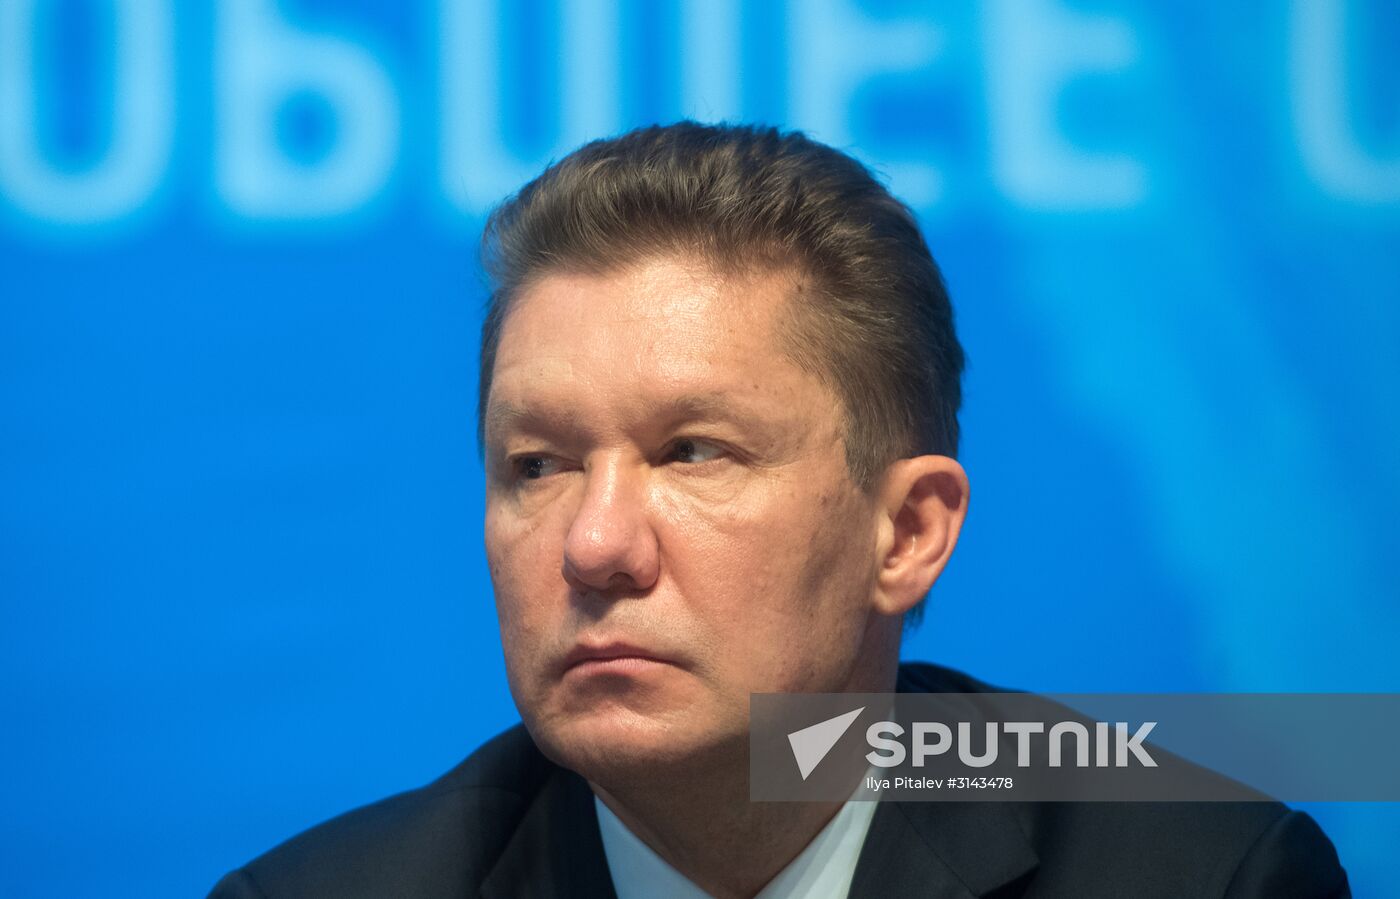 Annual general meeting of Gazprom shareholders